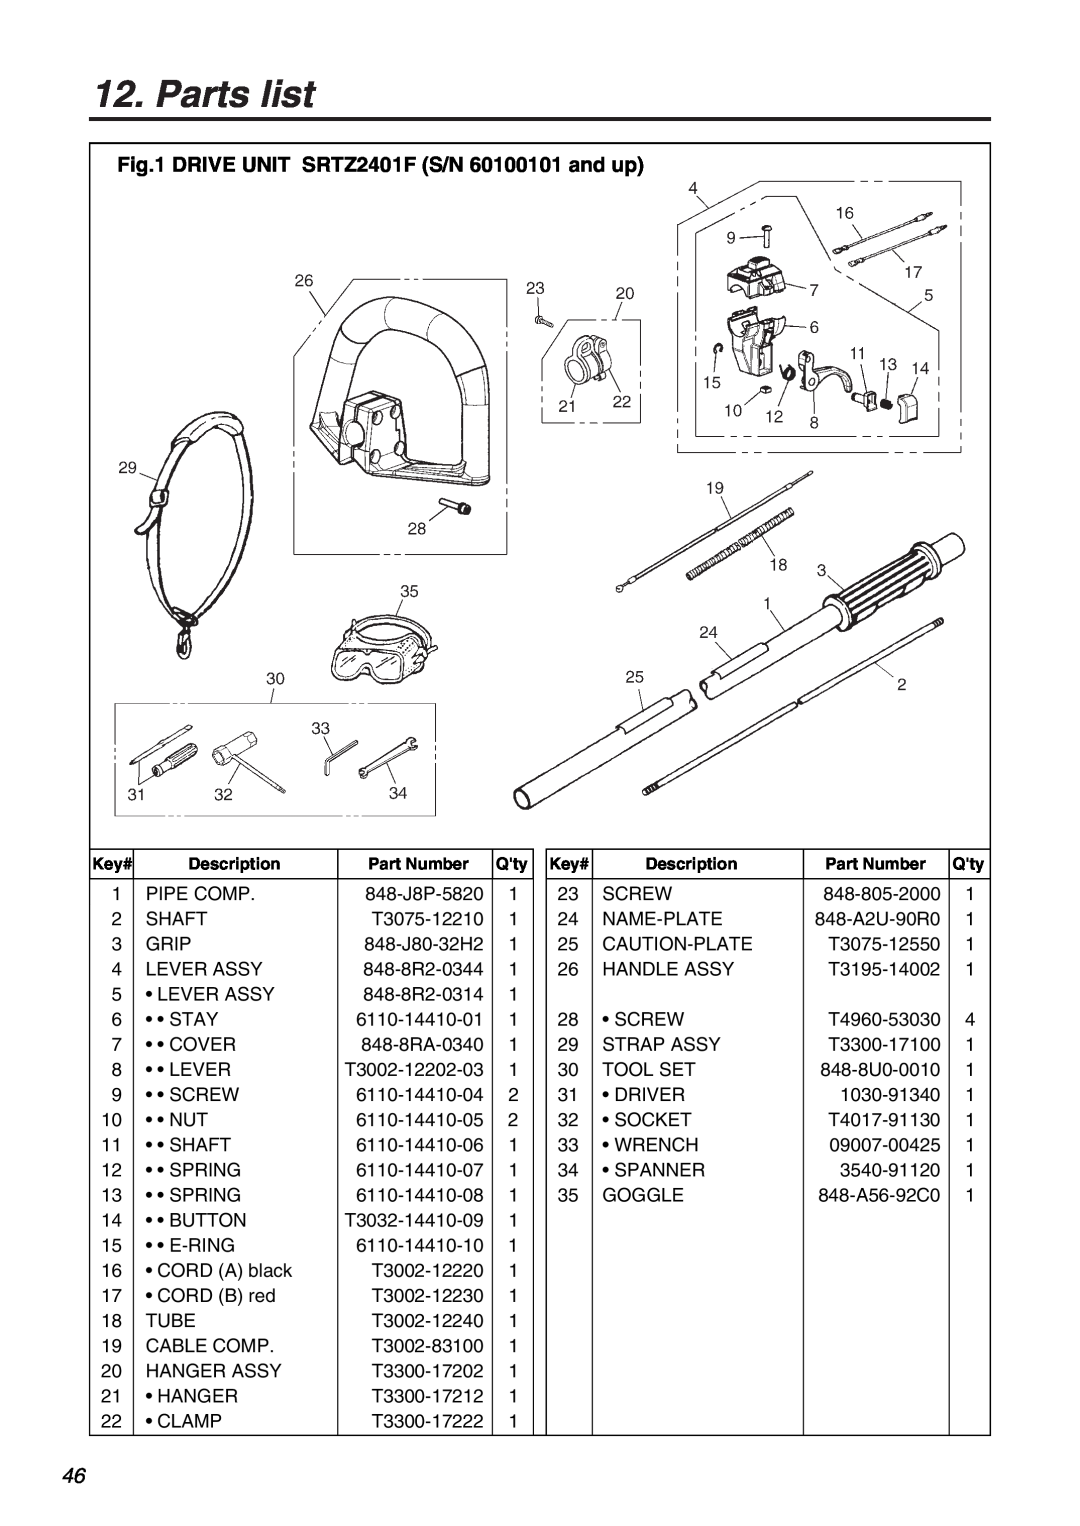 RedMax manual Parts list, DRIVE UNIT SRTZ2401F S/N 60100101 and up 